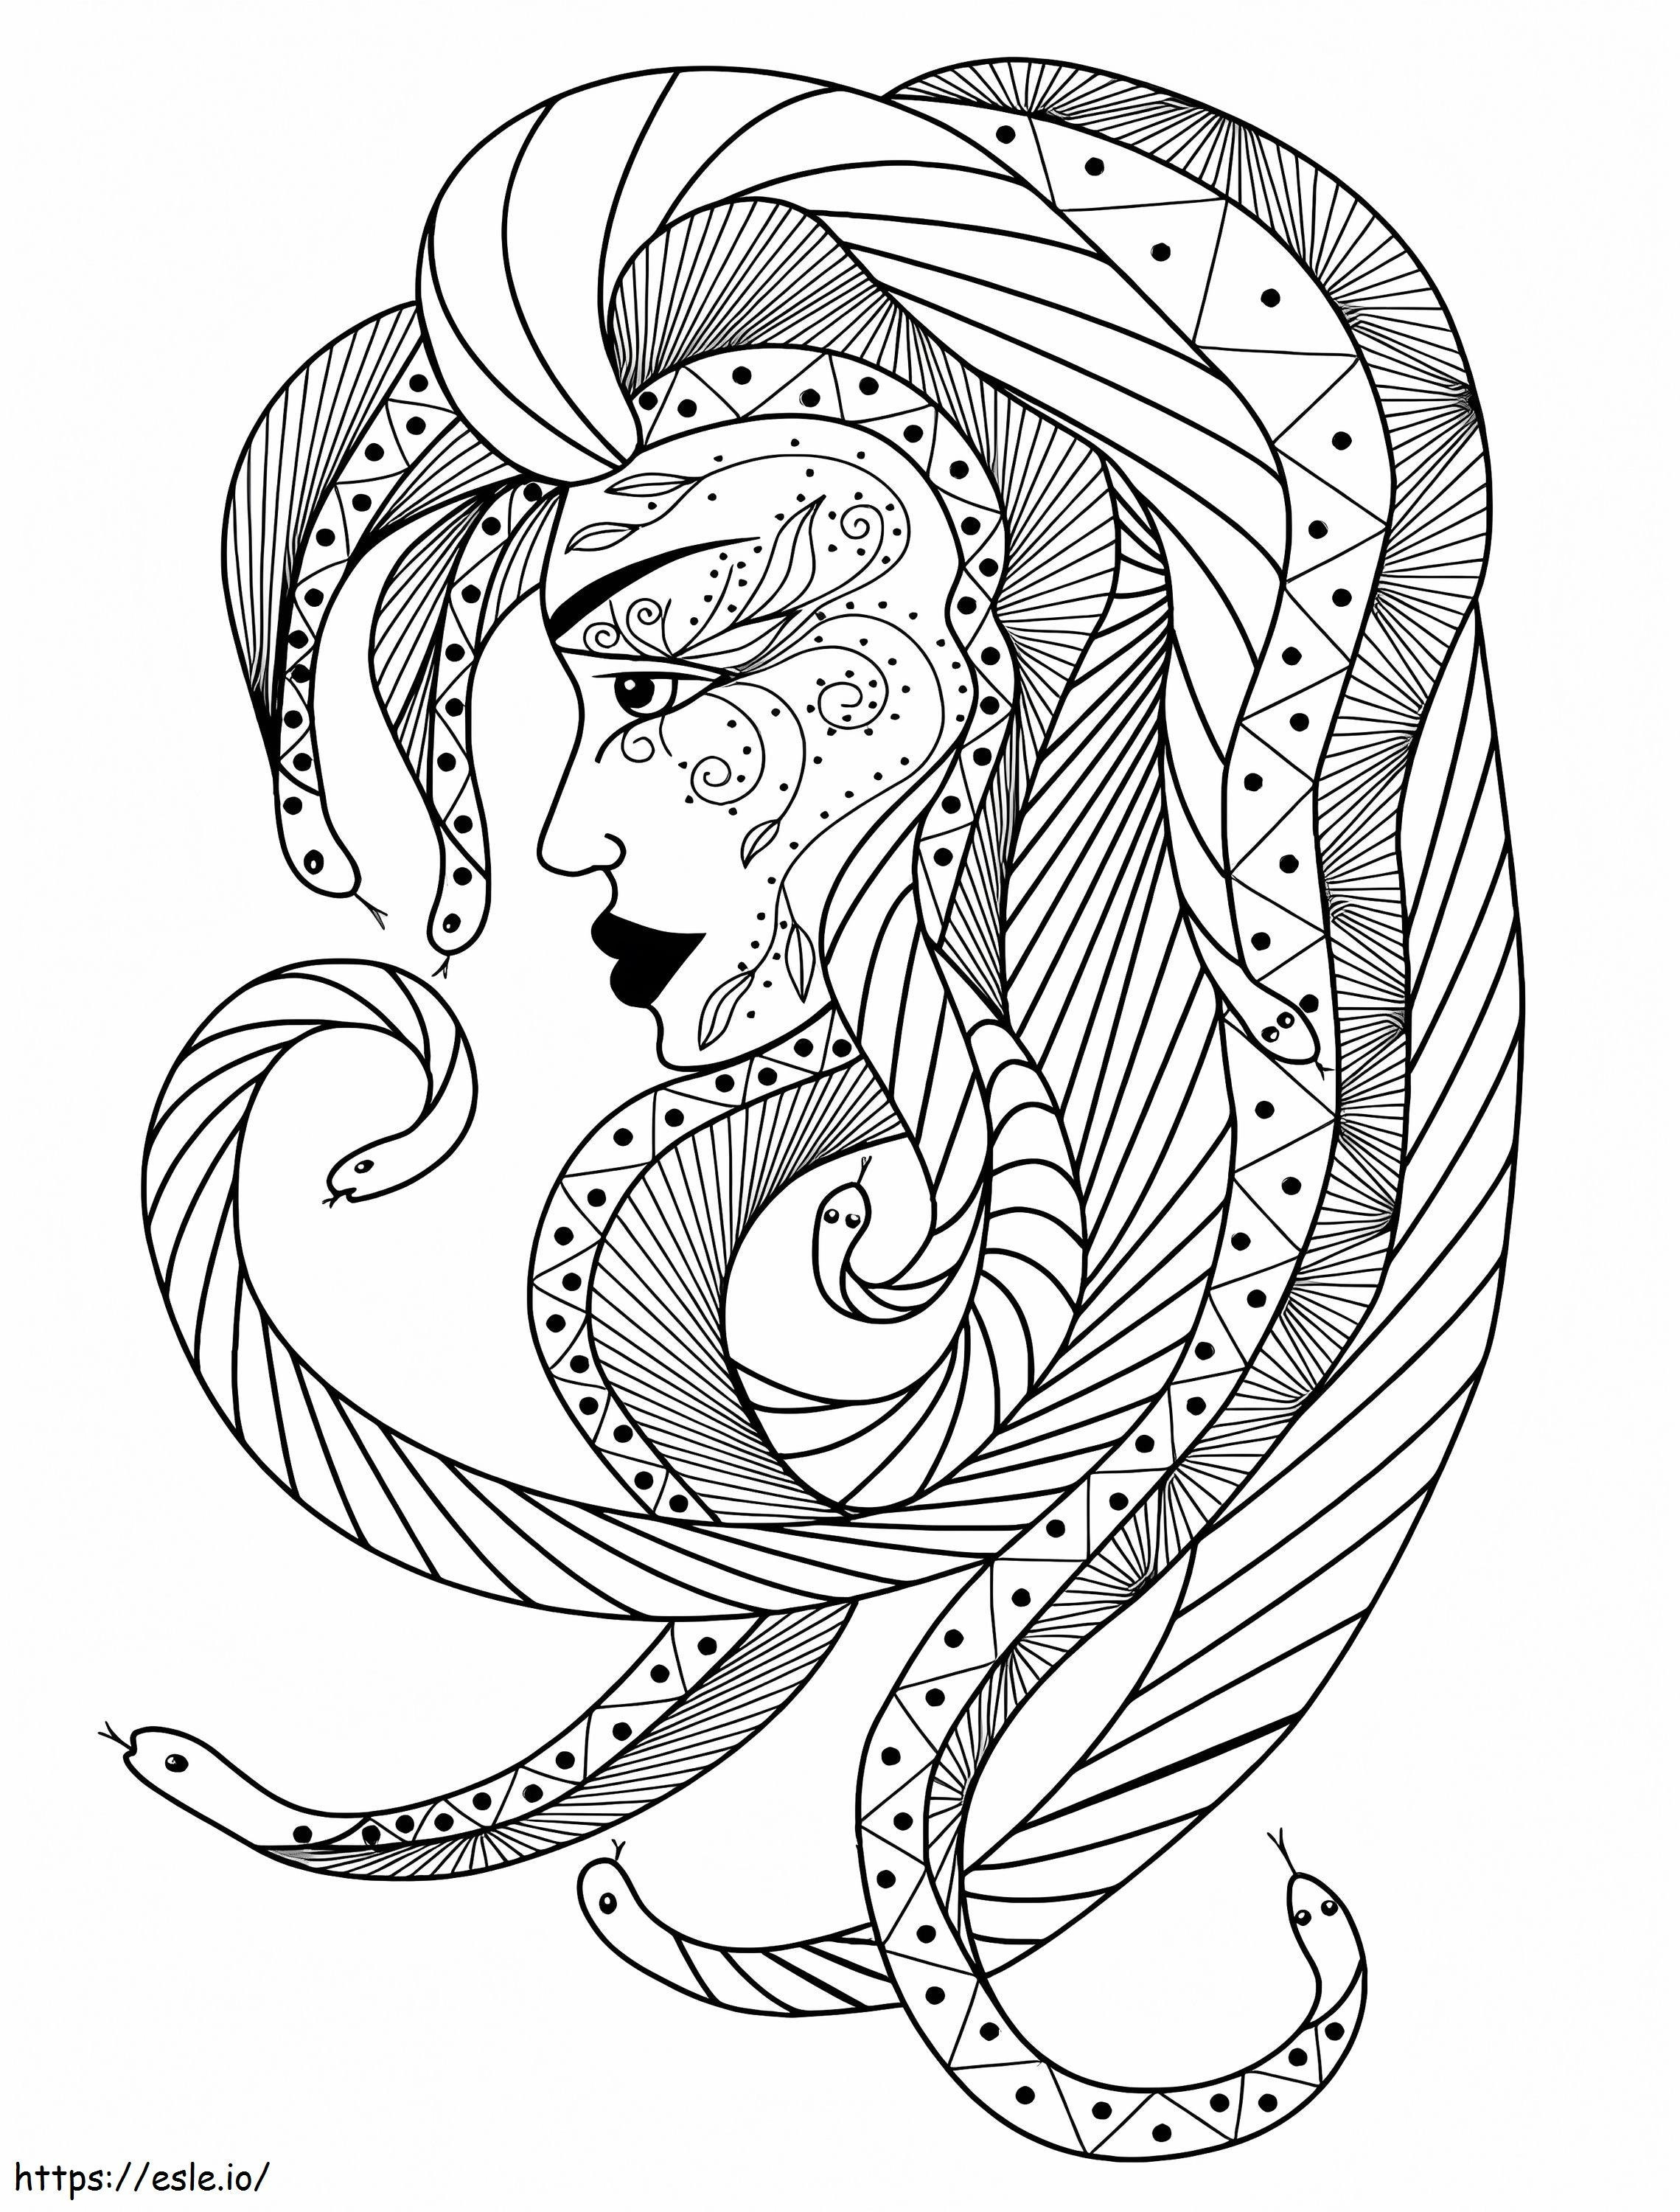 Medusa Mythology coloring page